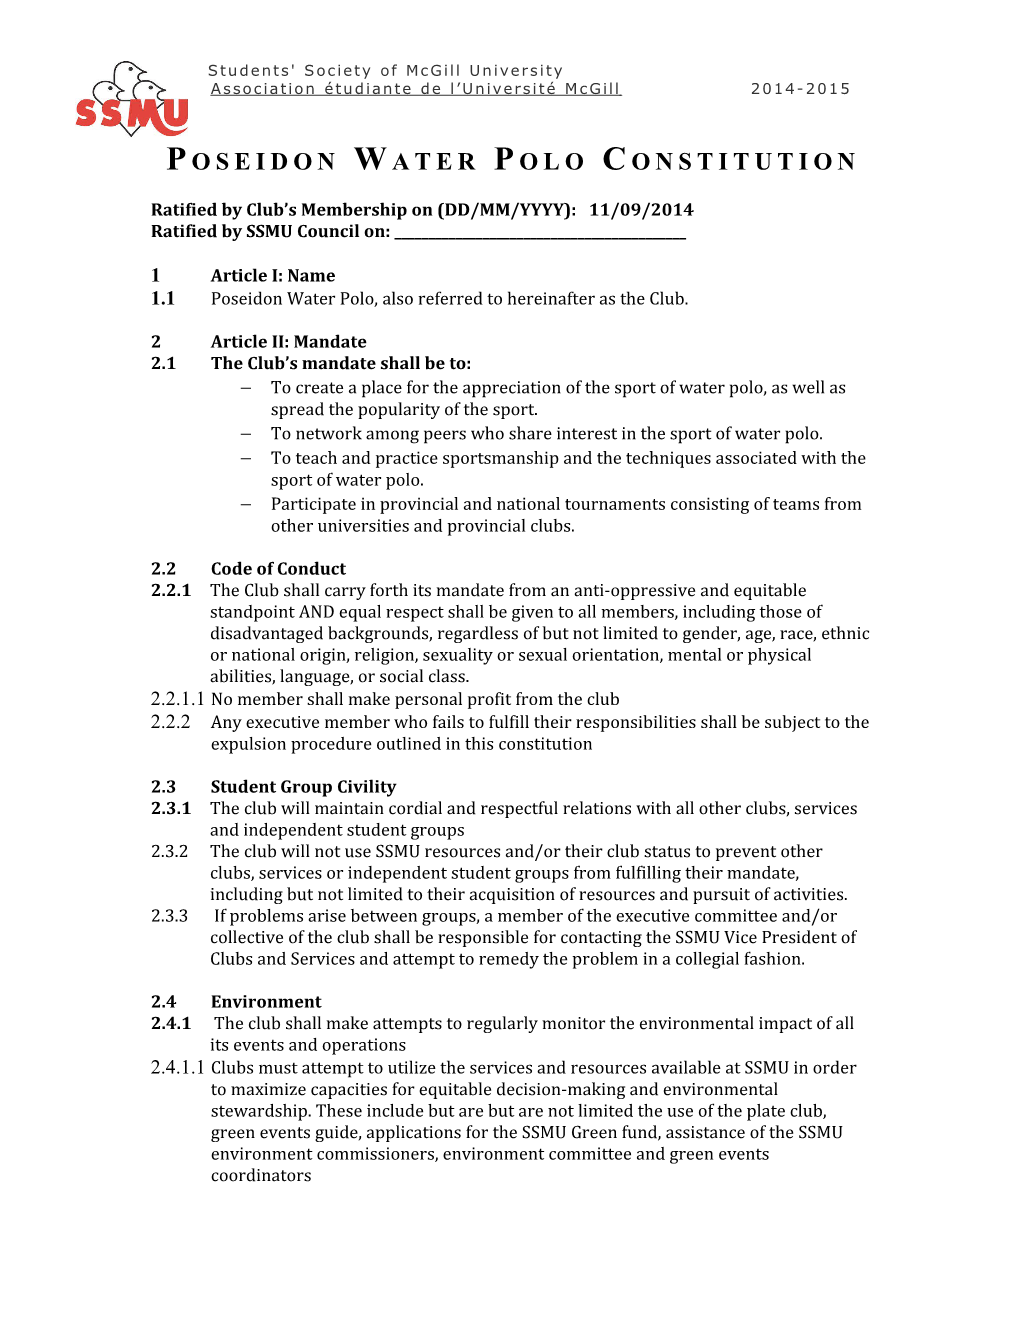 Poseidon Water Polo Constitution